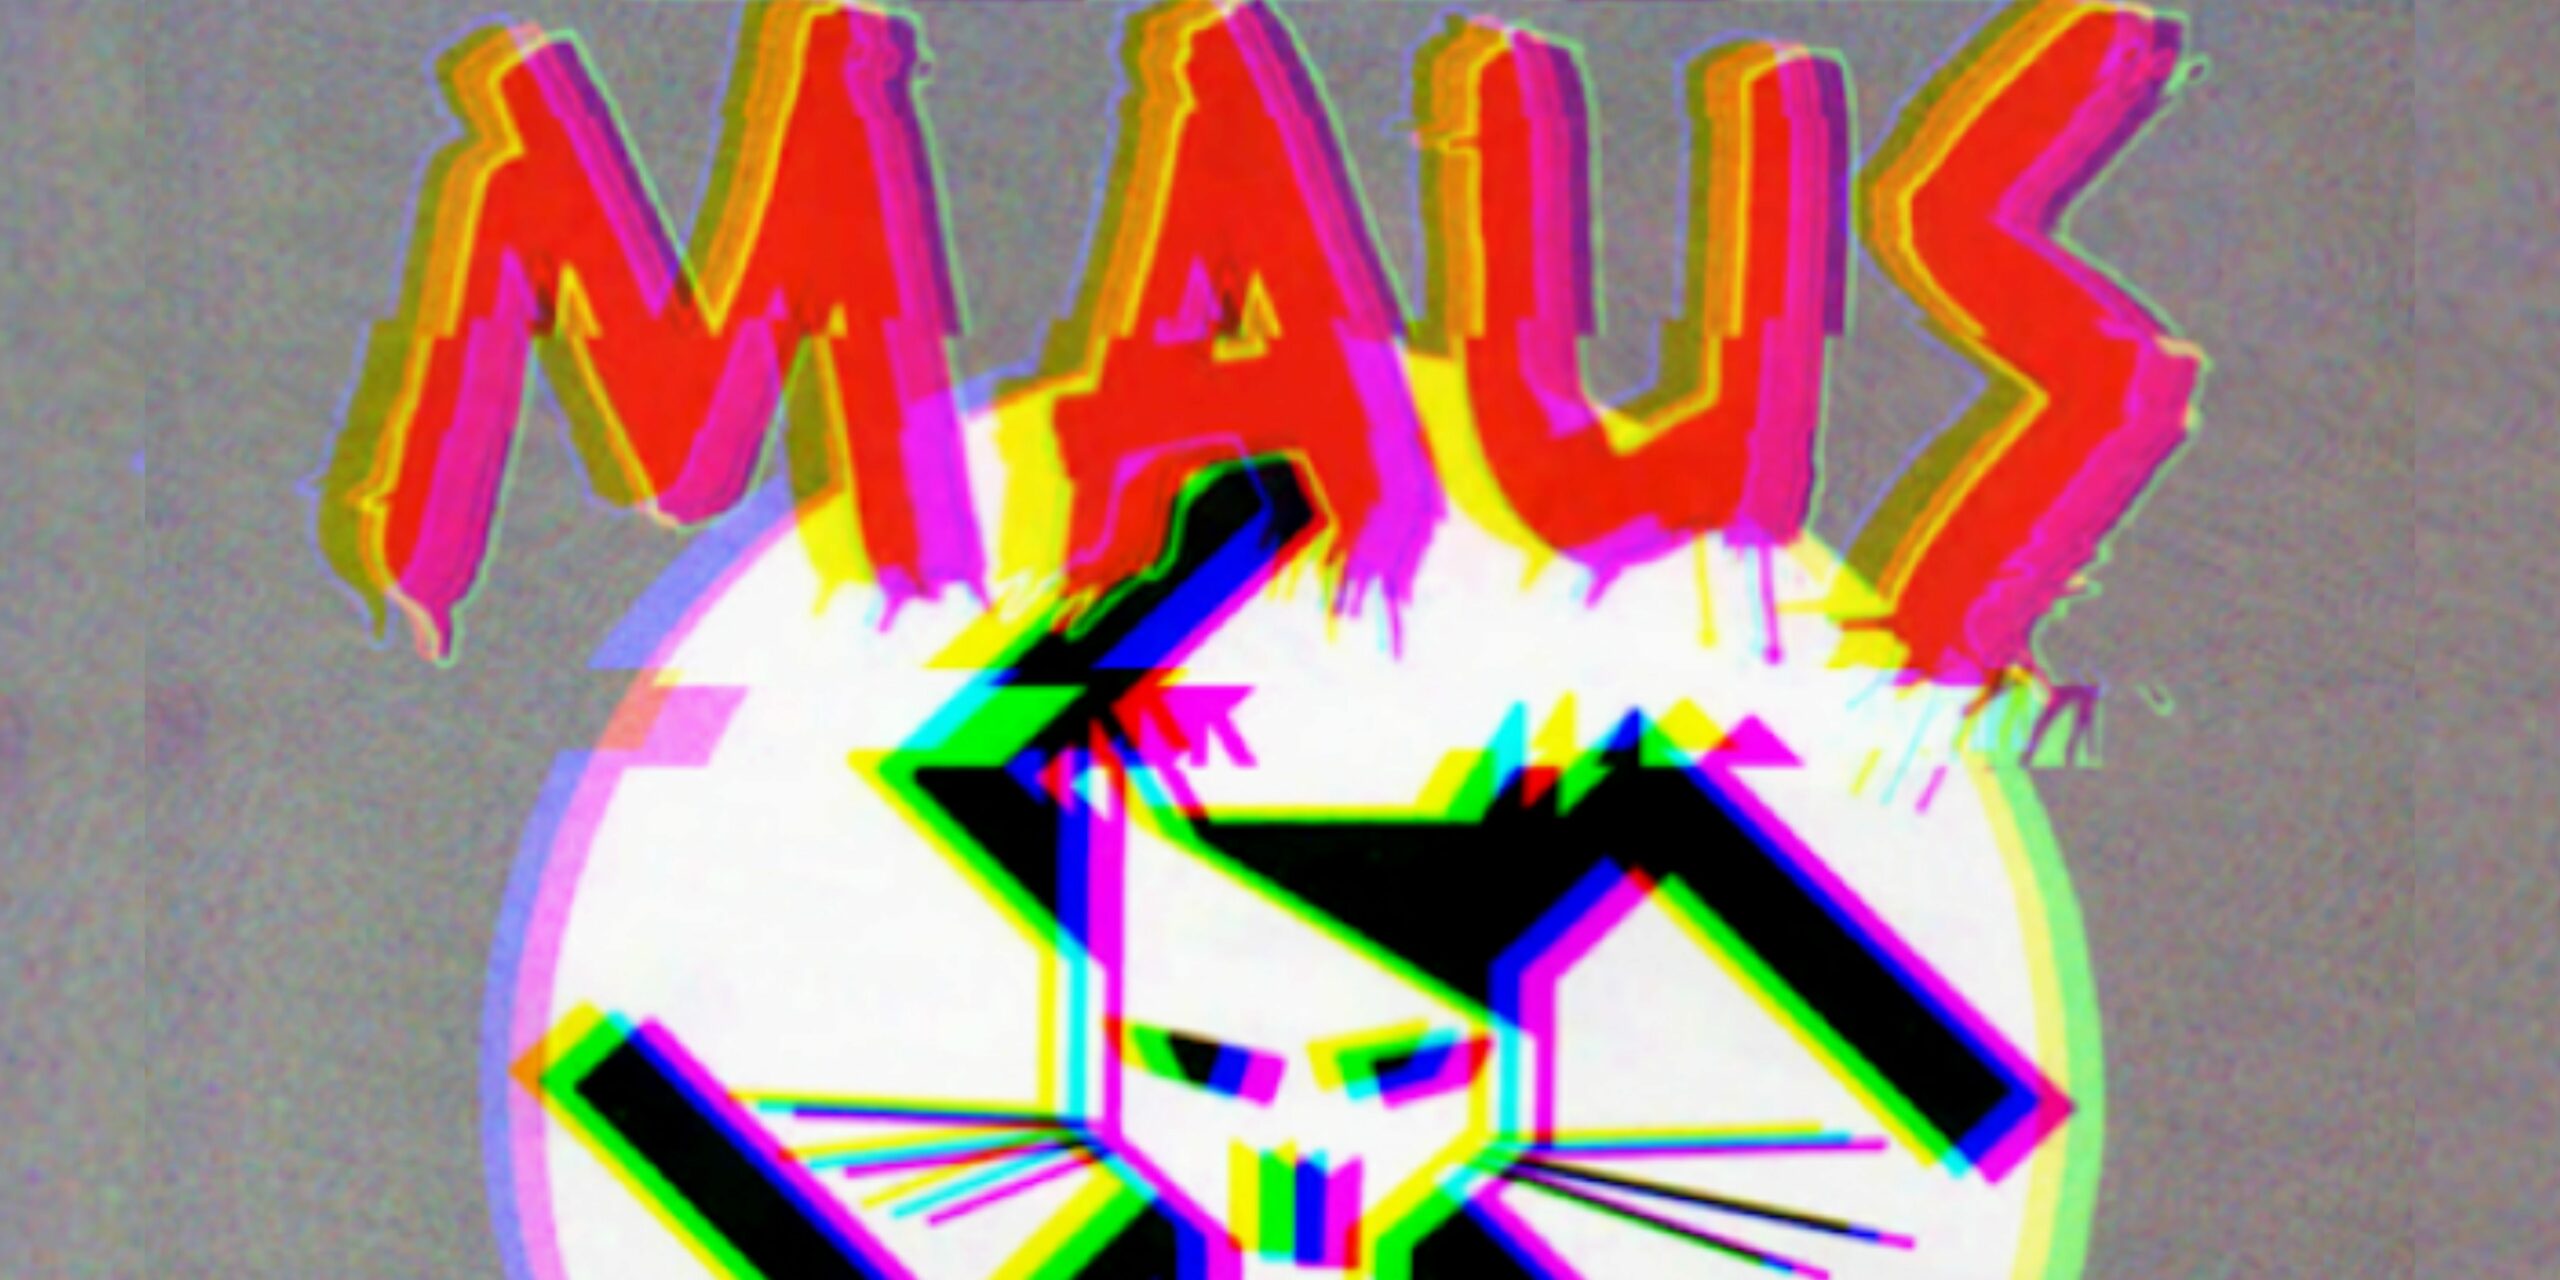 Maus II (And here my troubles begin), Art Spiegelman, 1992